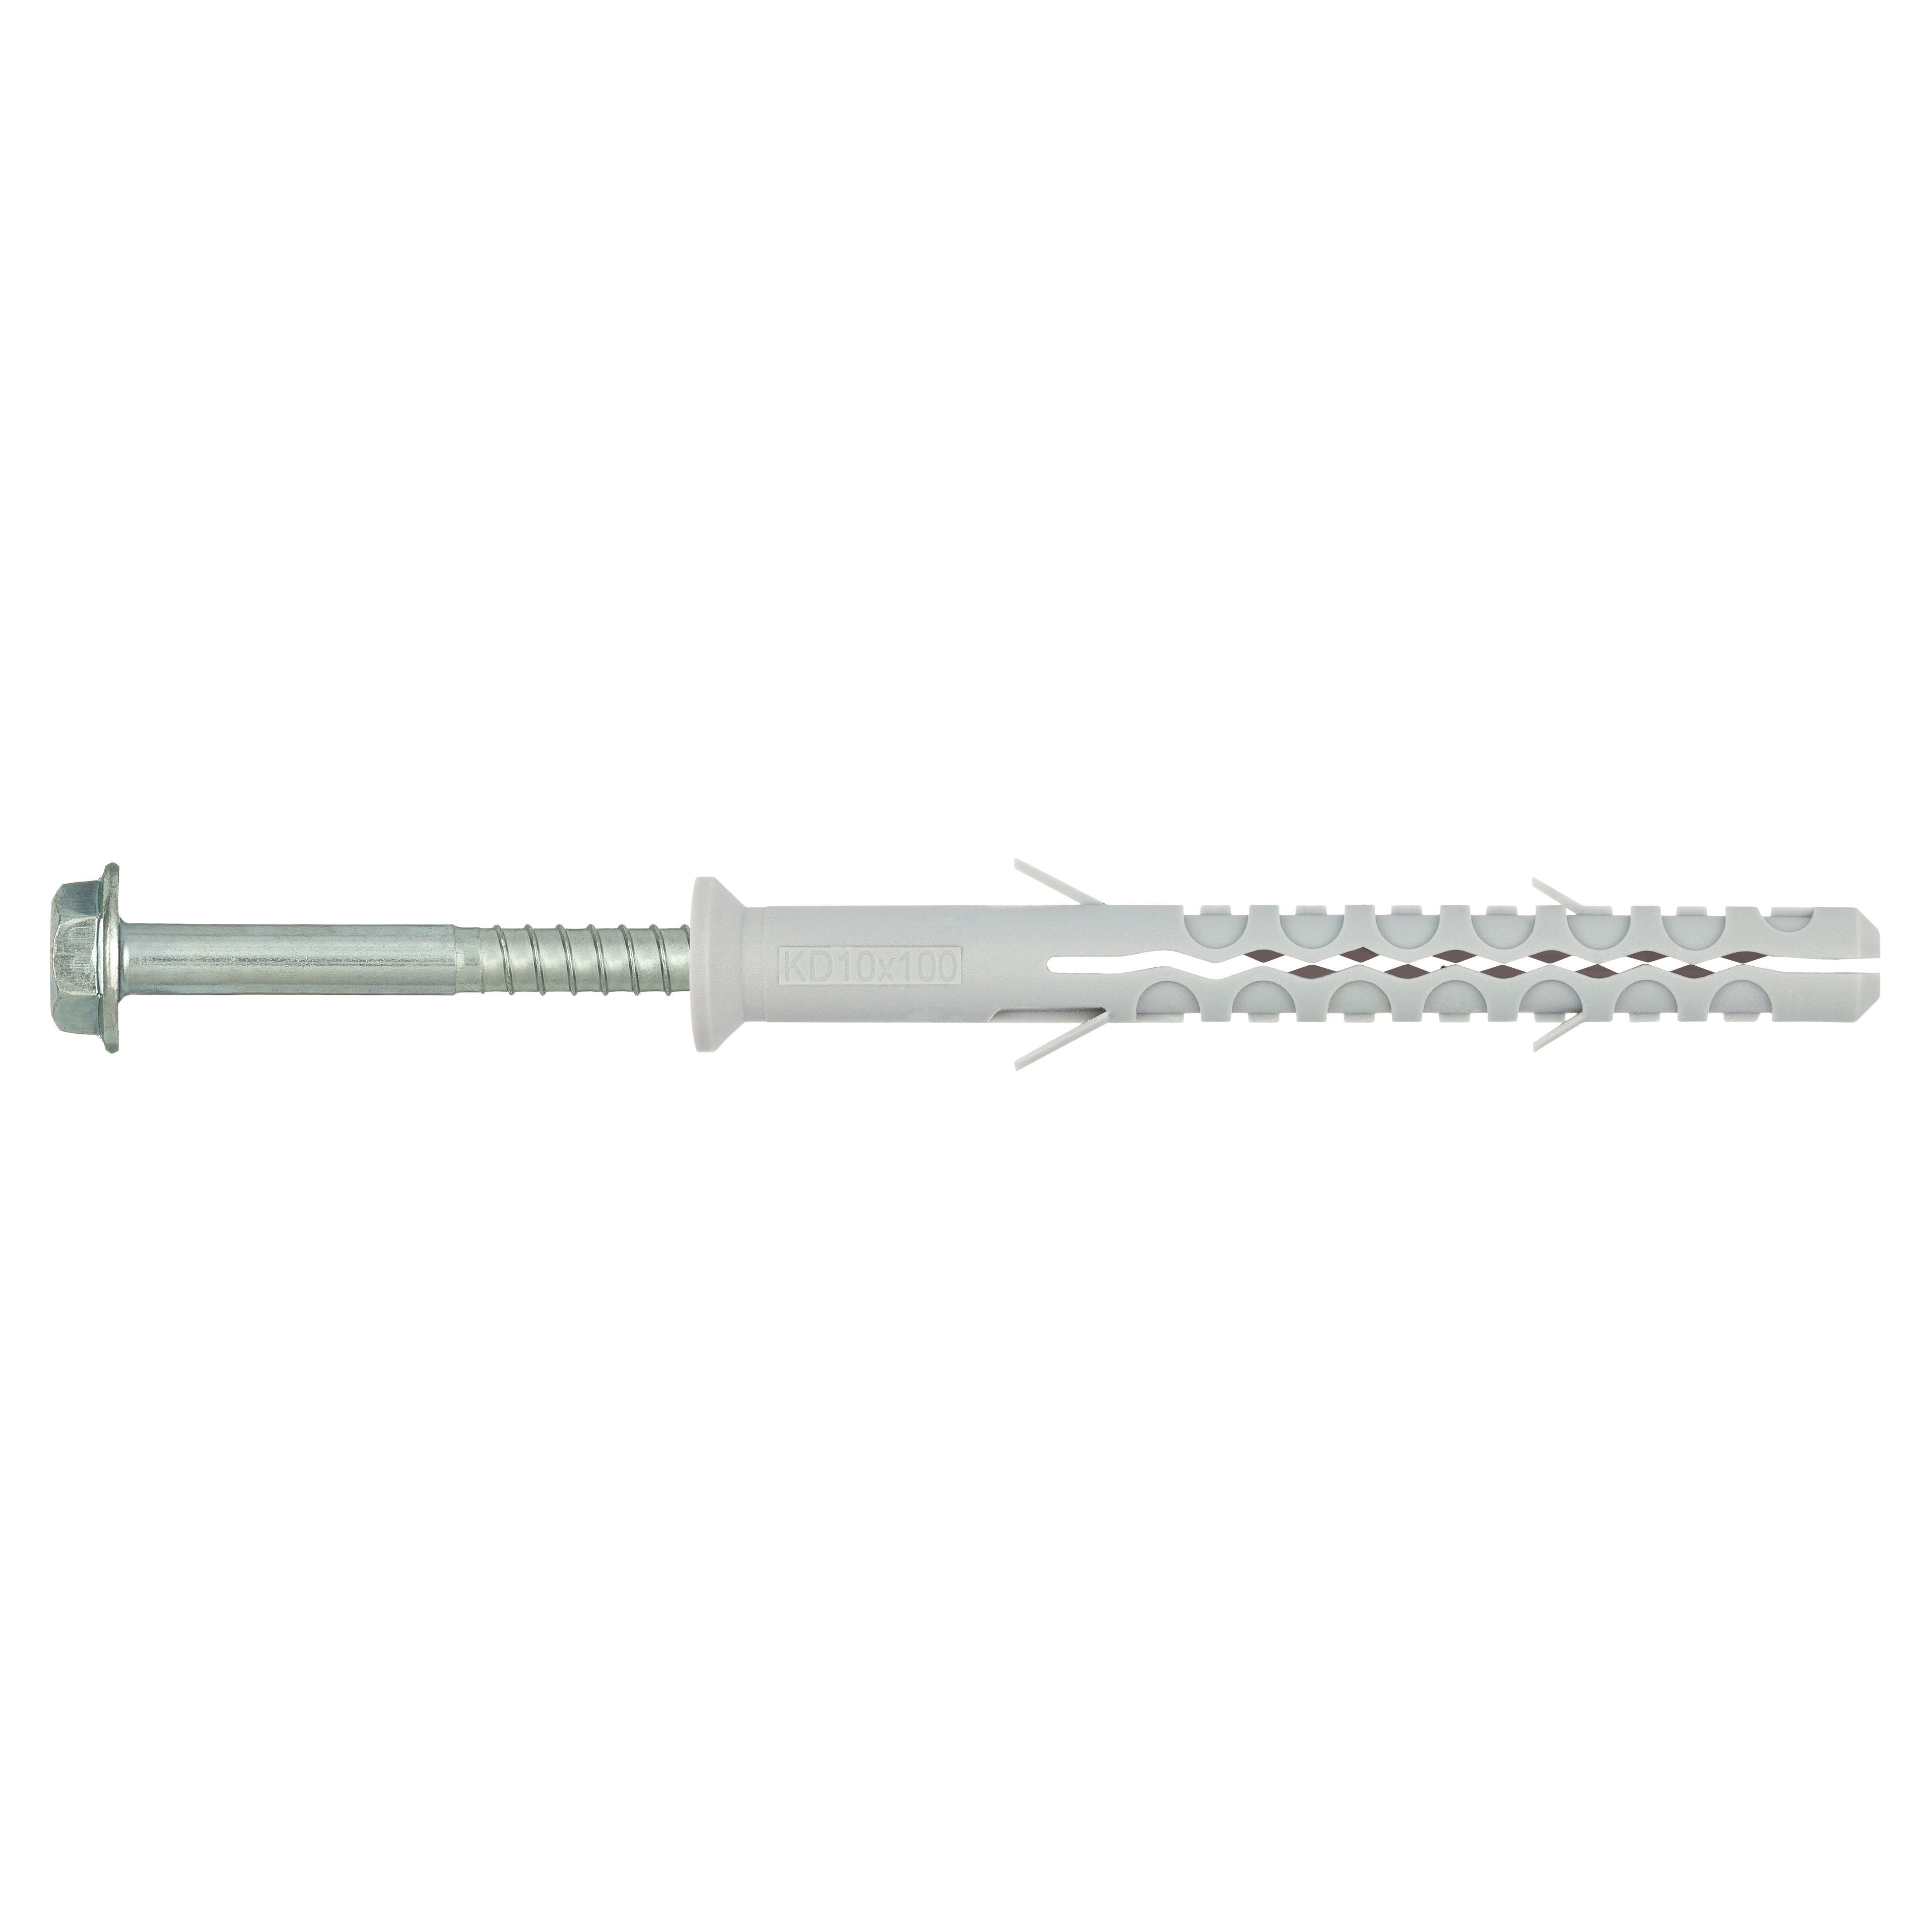 Diall Hex Grey Multi-purpose screw & wall plug (Dia)10mm (L)140mm, Pack of 6